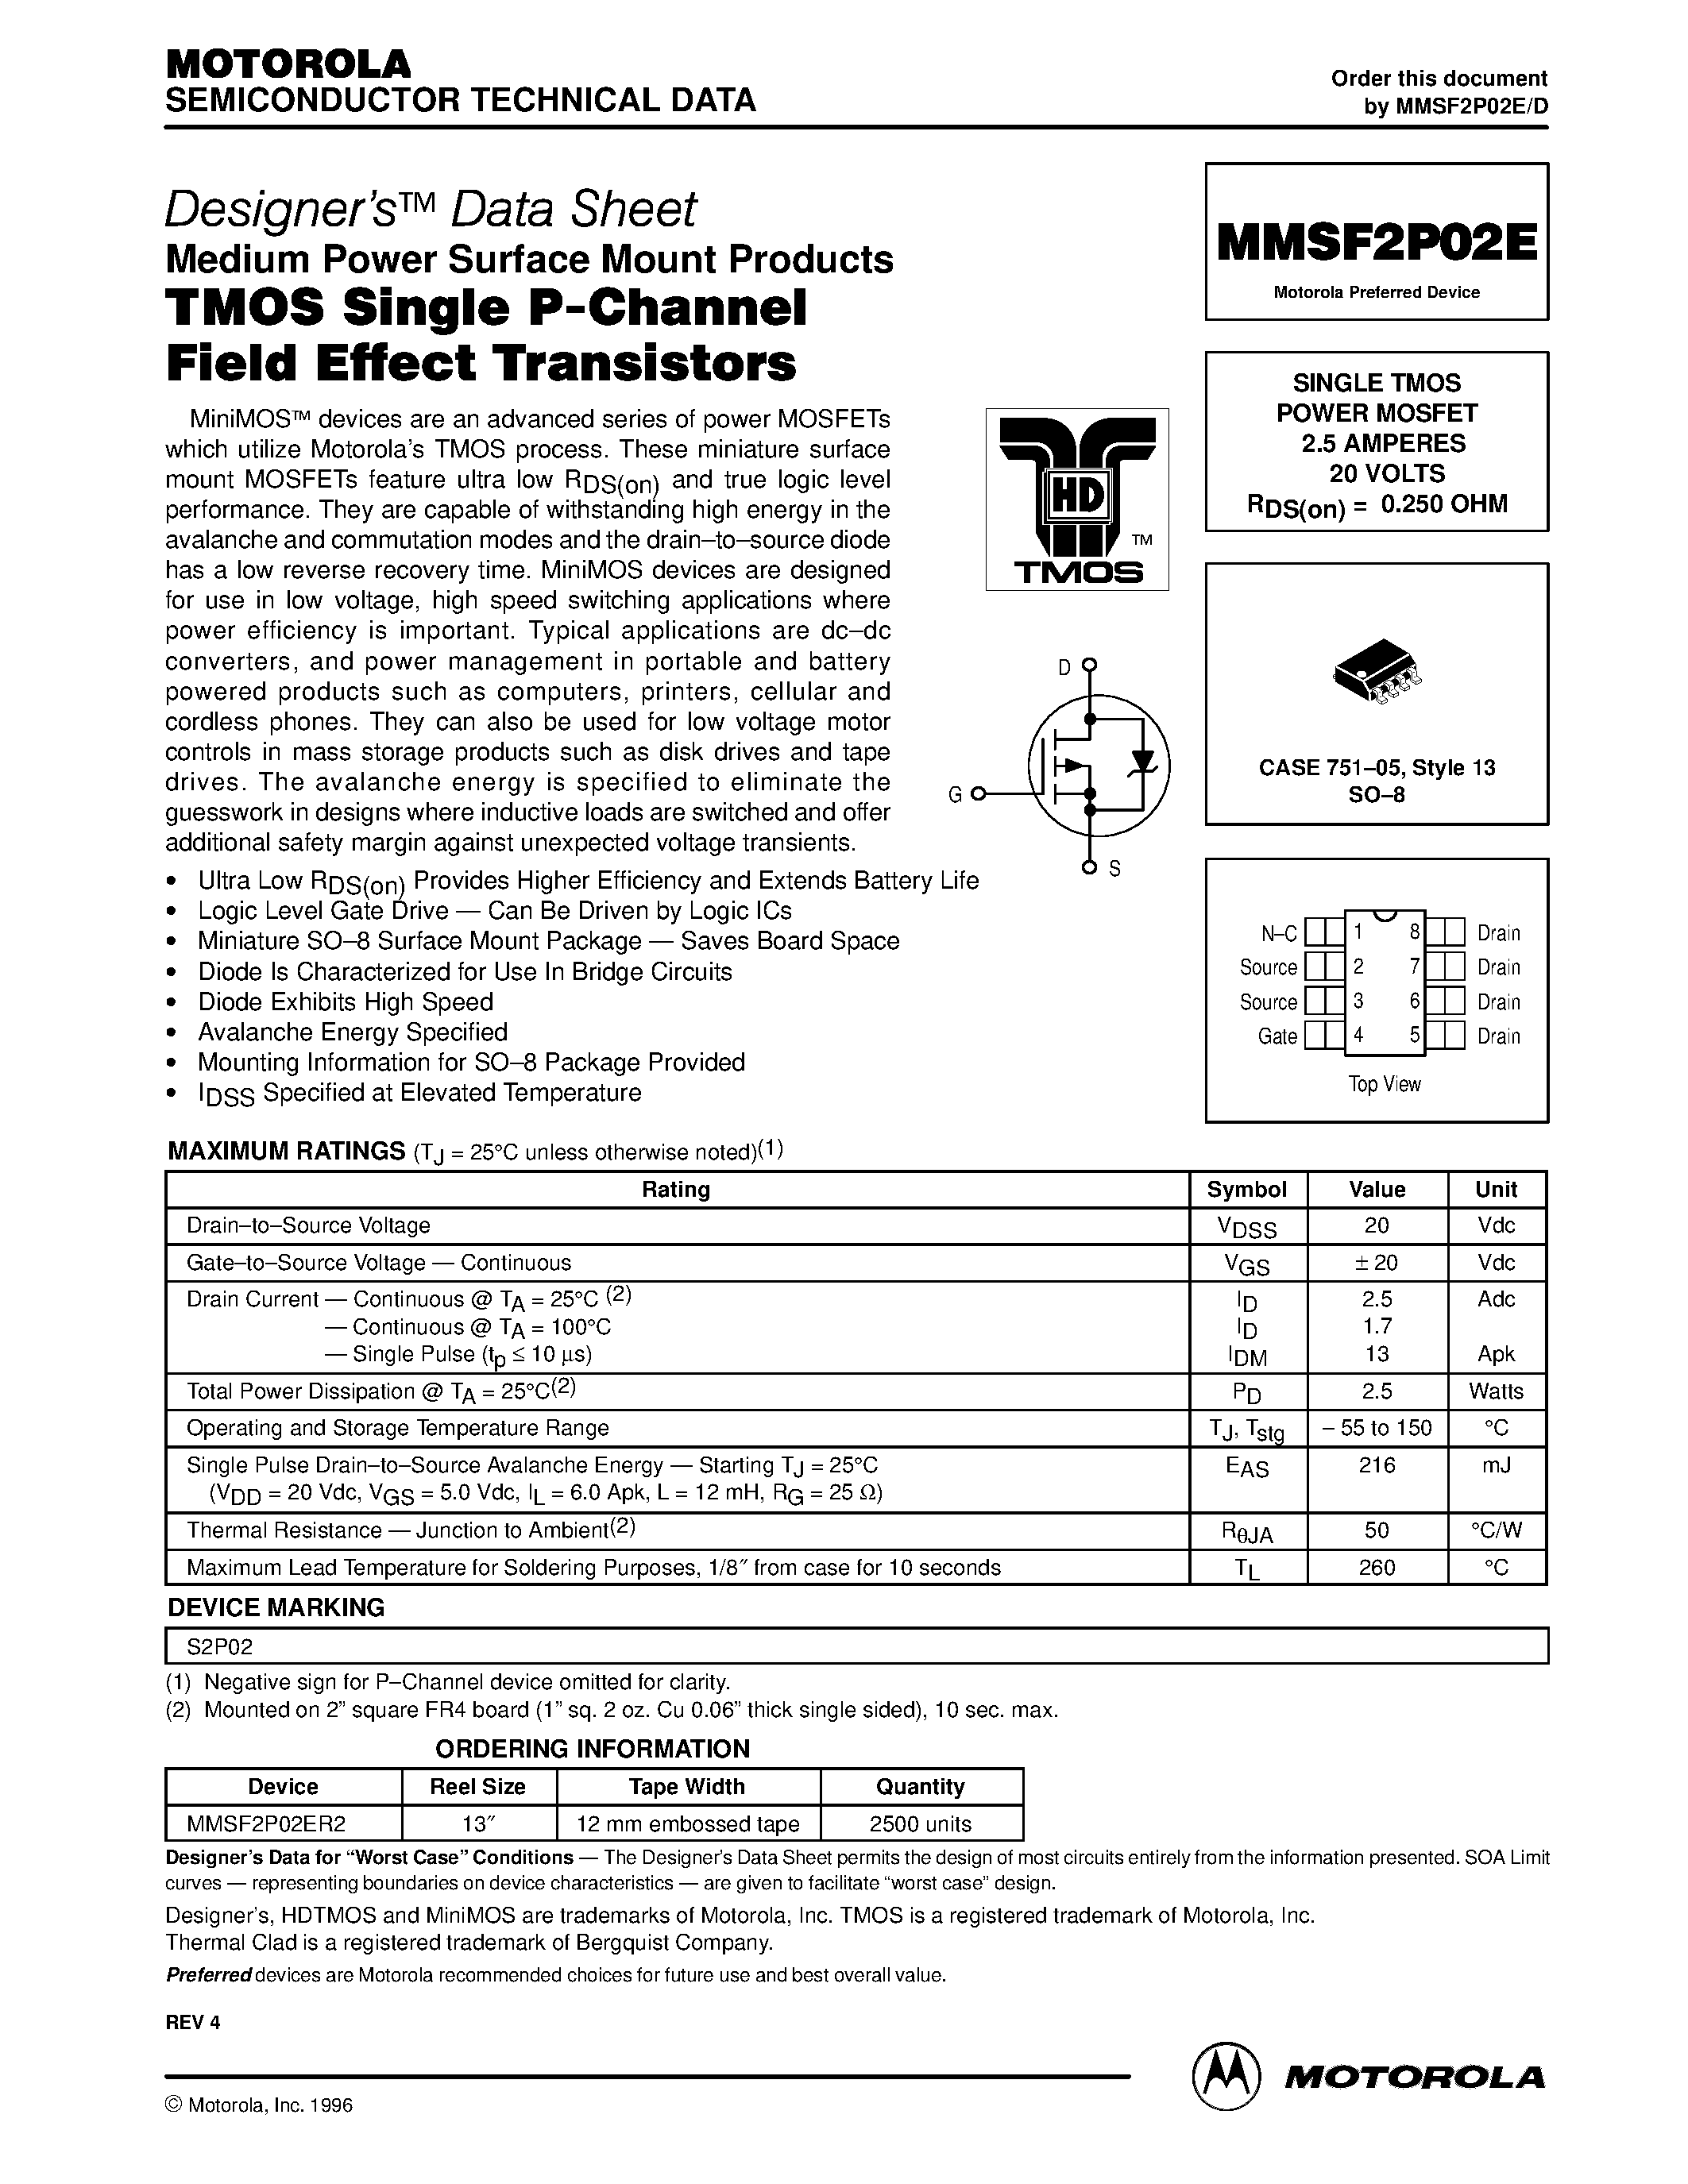 Datasheet MMSF2P02E - SINGLE TMOS POWER MOSFET 2.5 AMPERES 20 VOLTS page 1